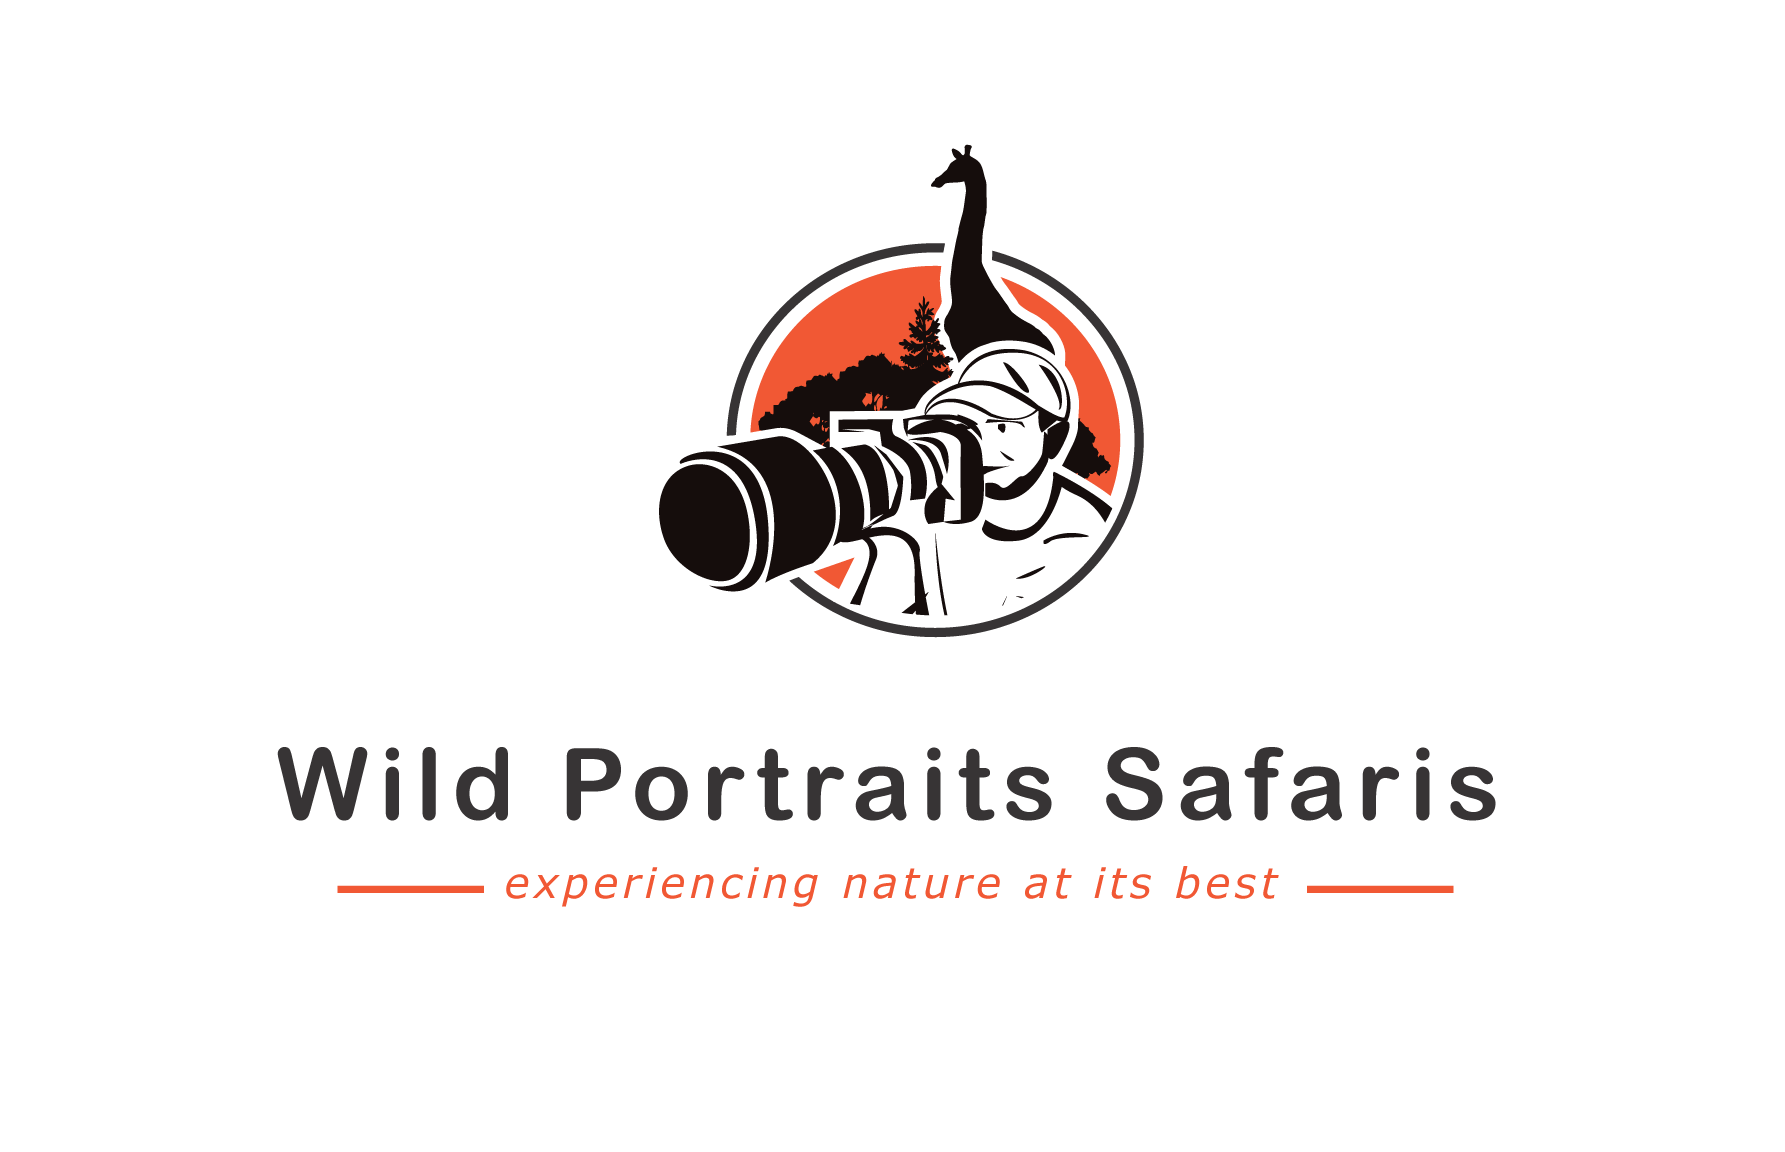 Wildportraits Safaris